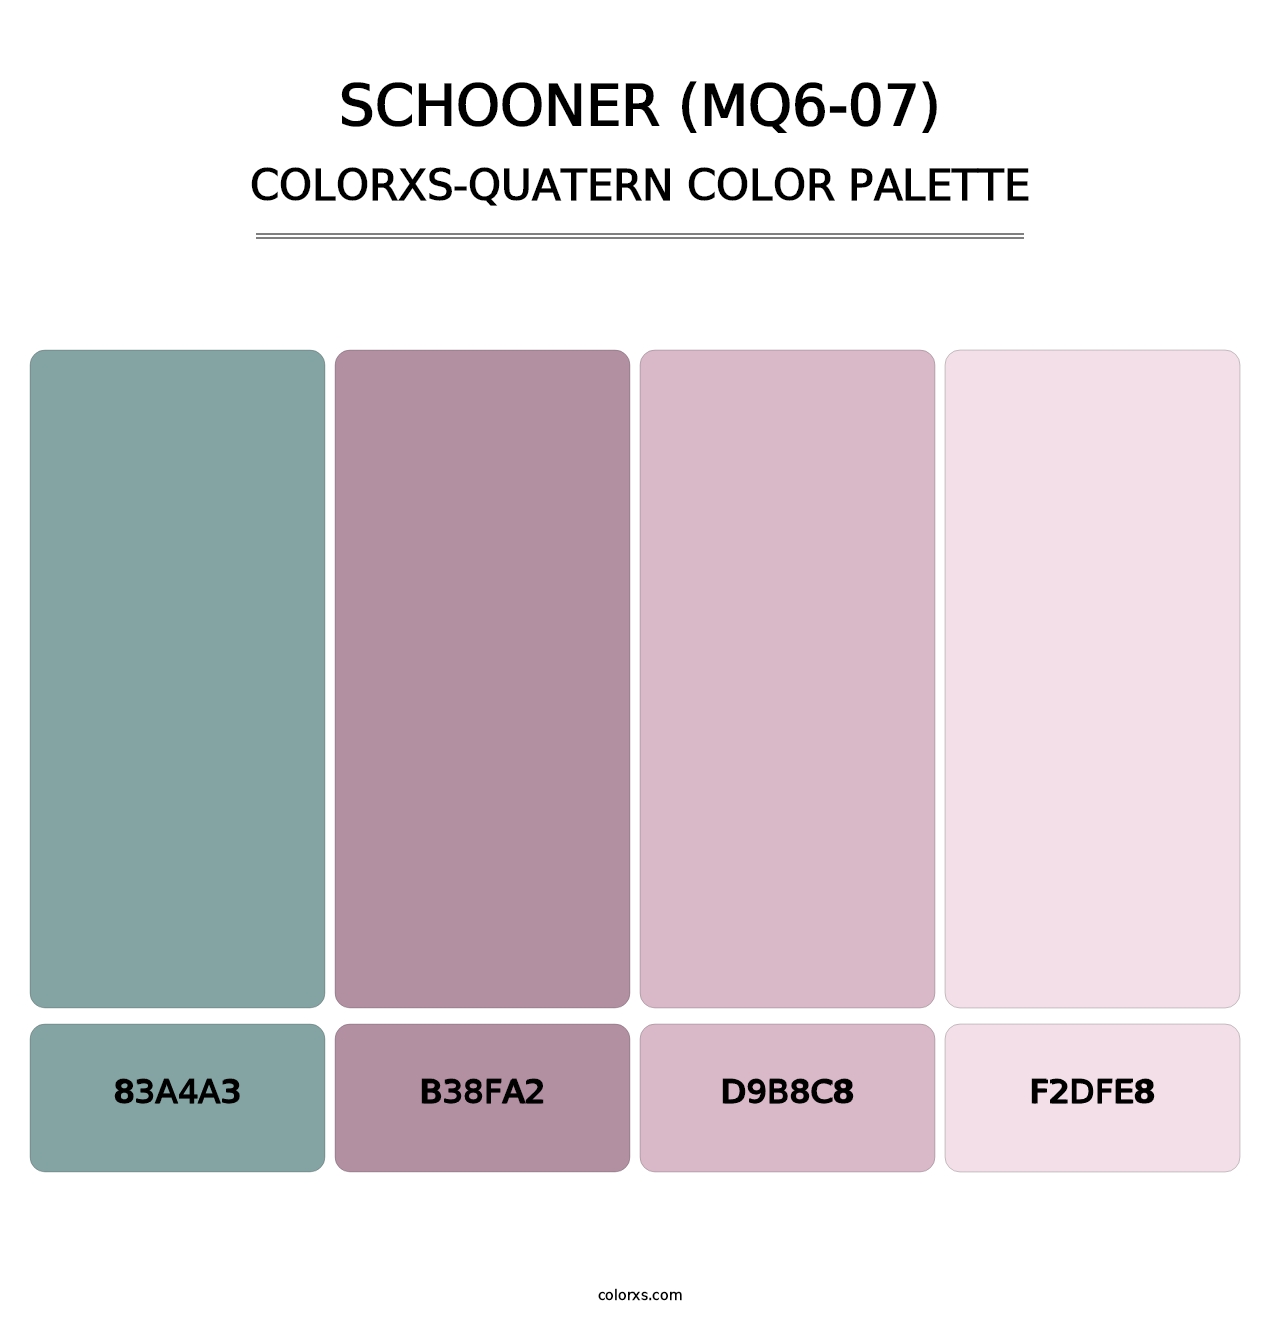 Schooner (MQ6-07) - Colorxs Quatern Palette